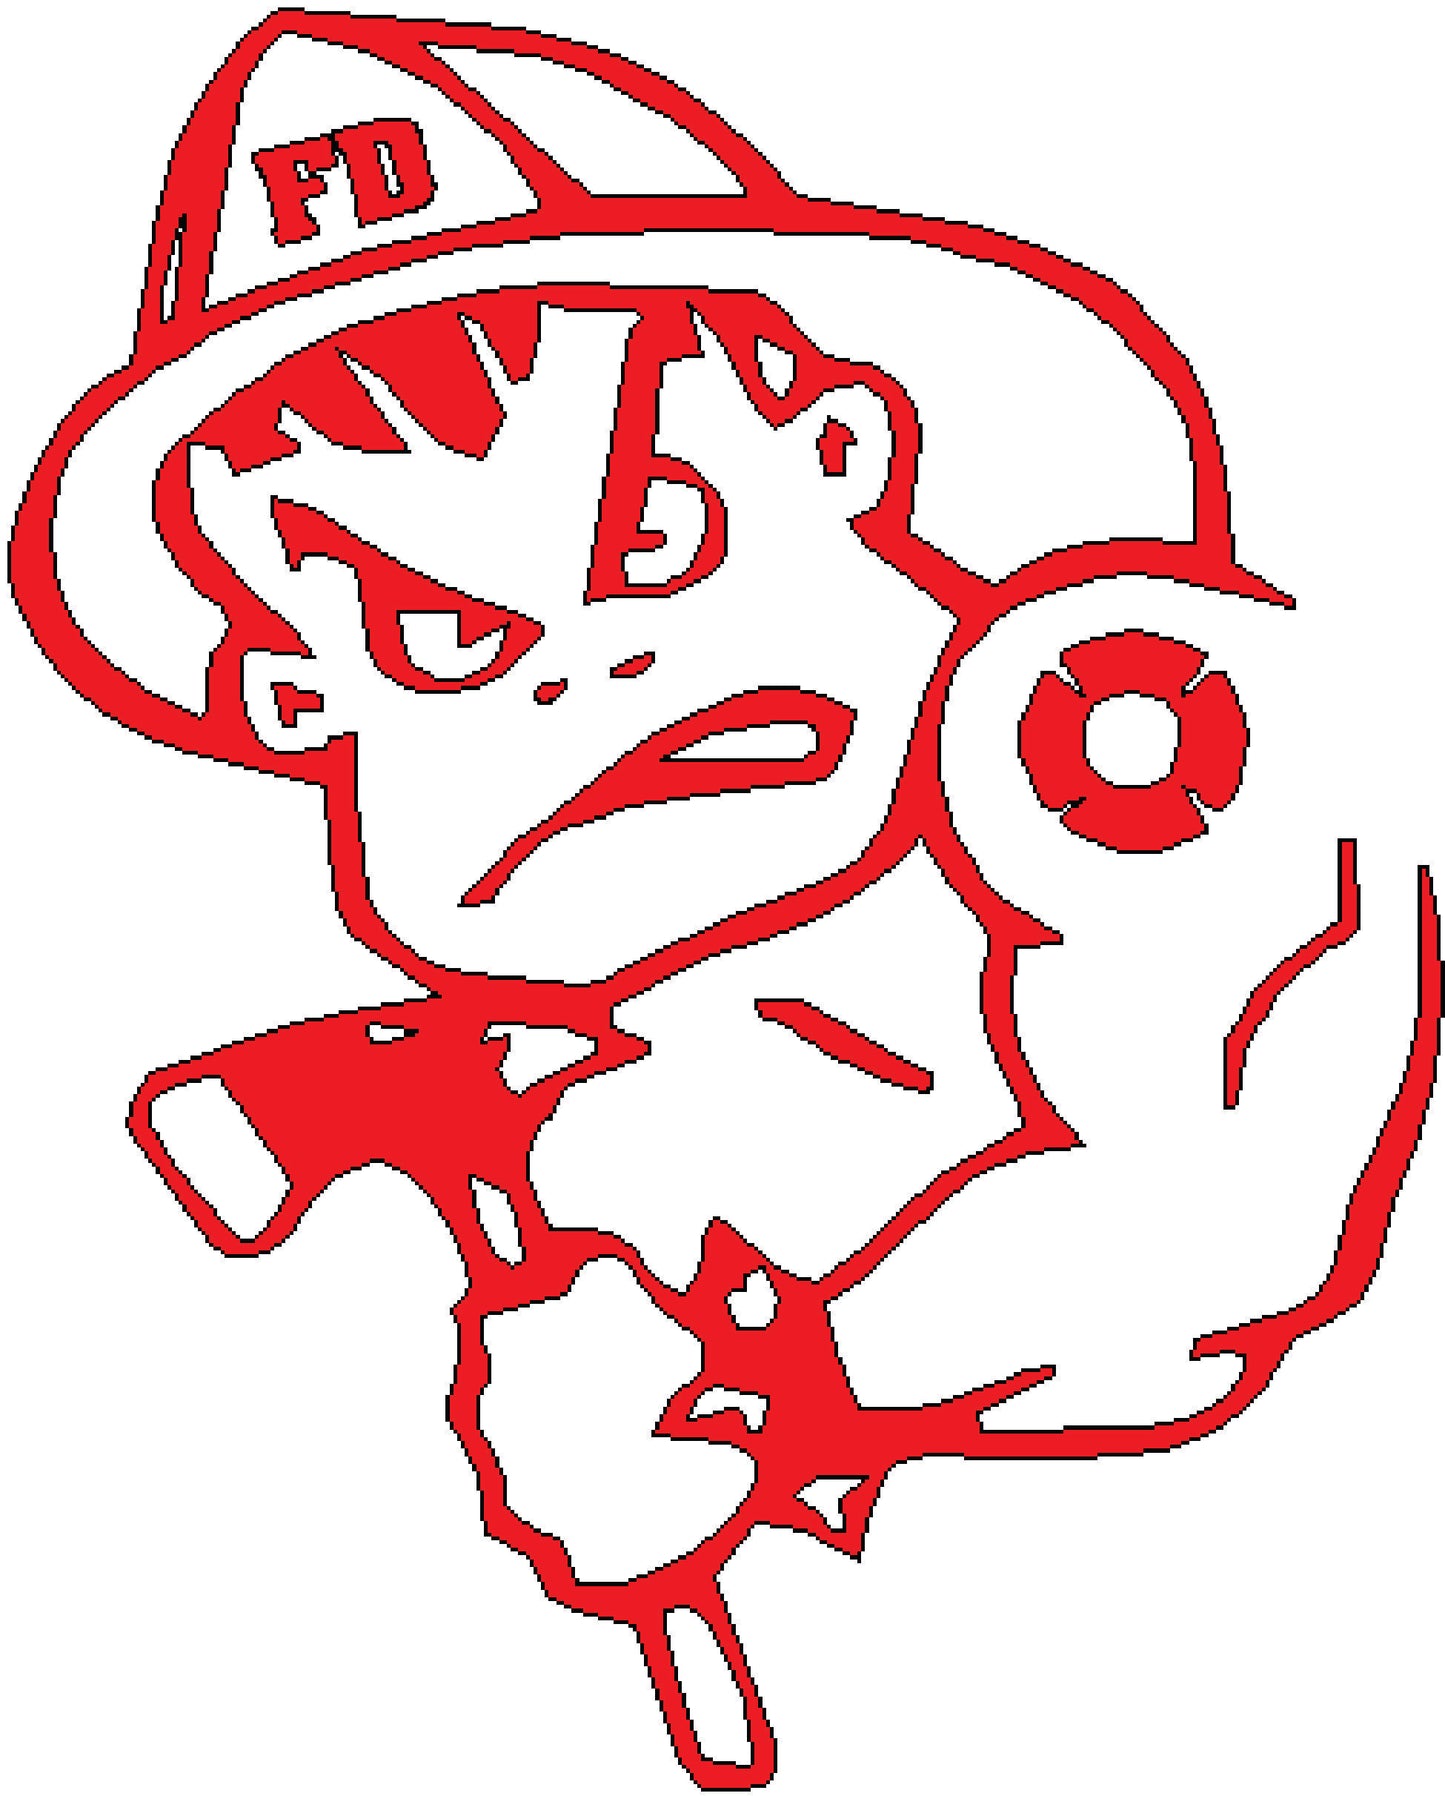 Bad Boy Firefighter Decal / Sticker